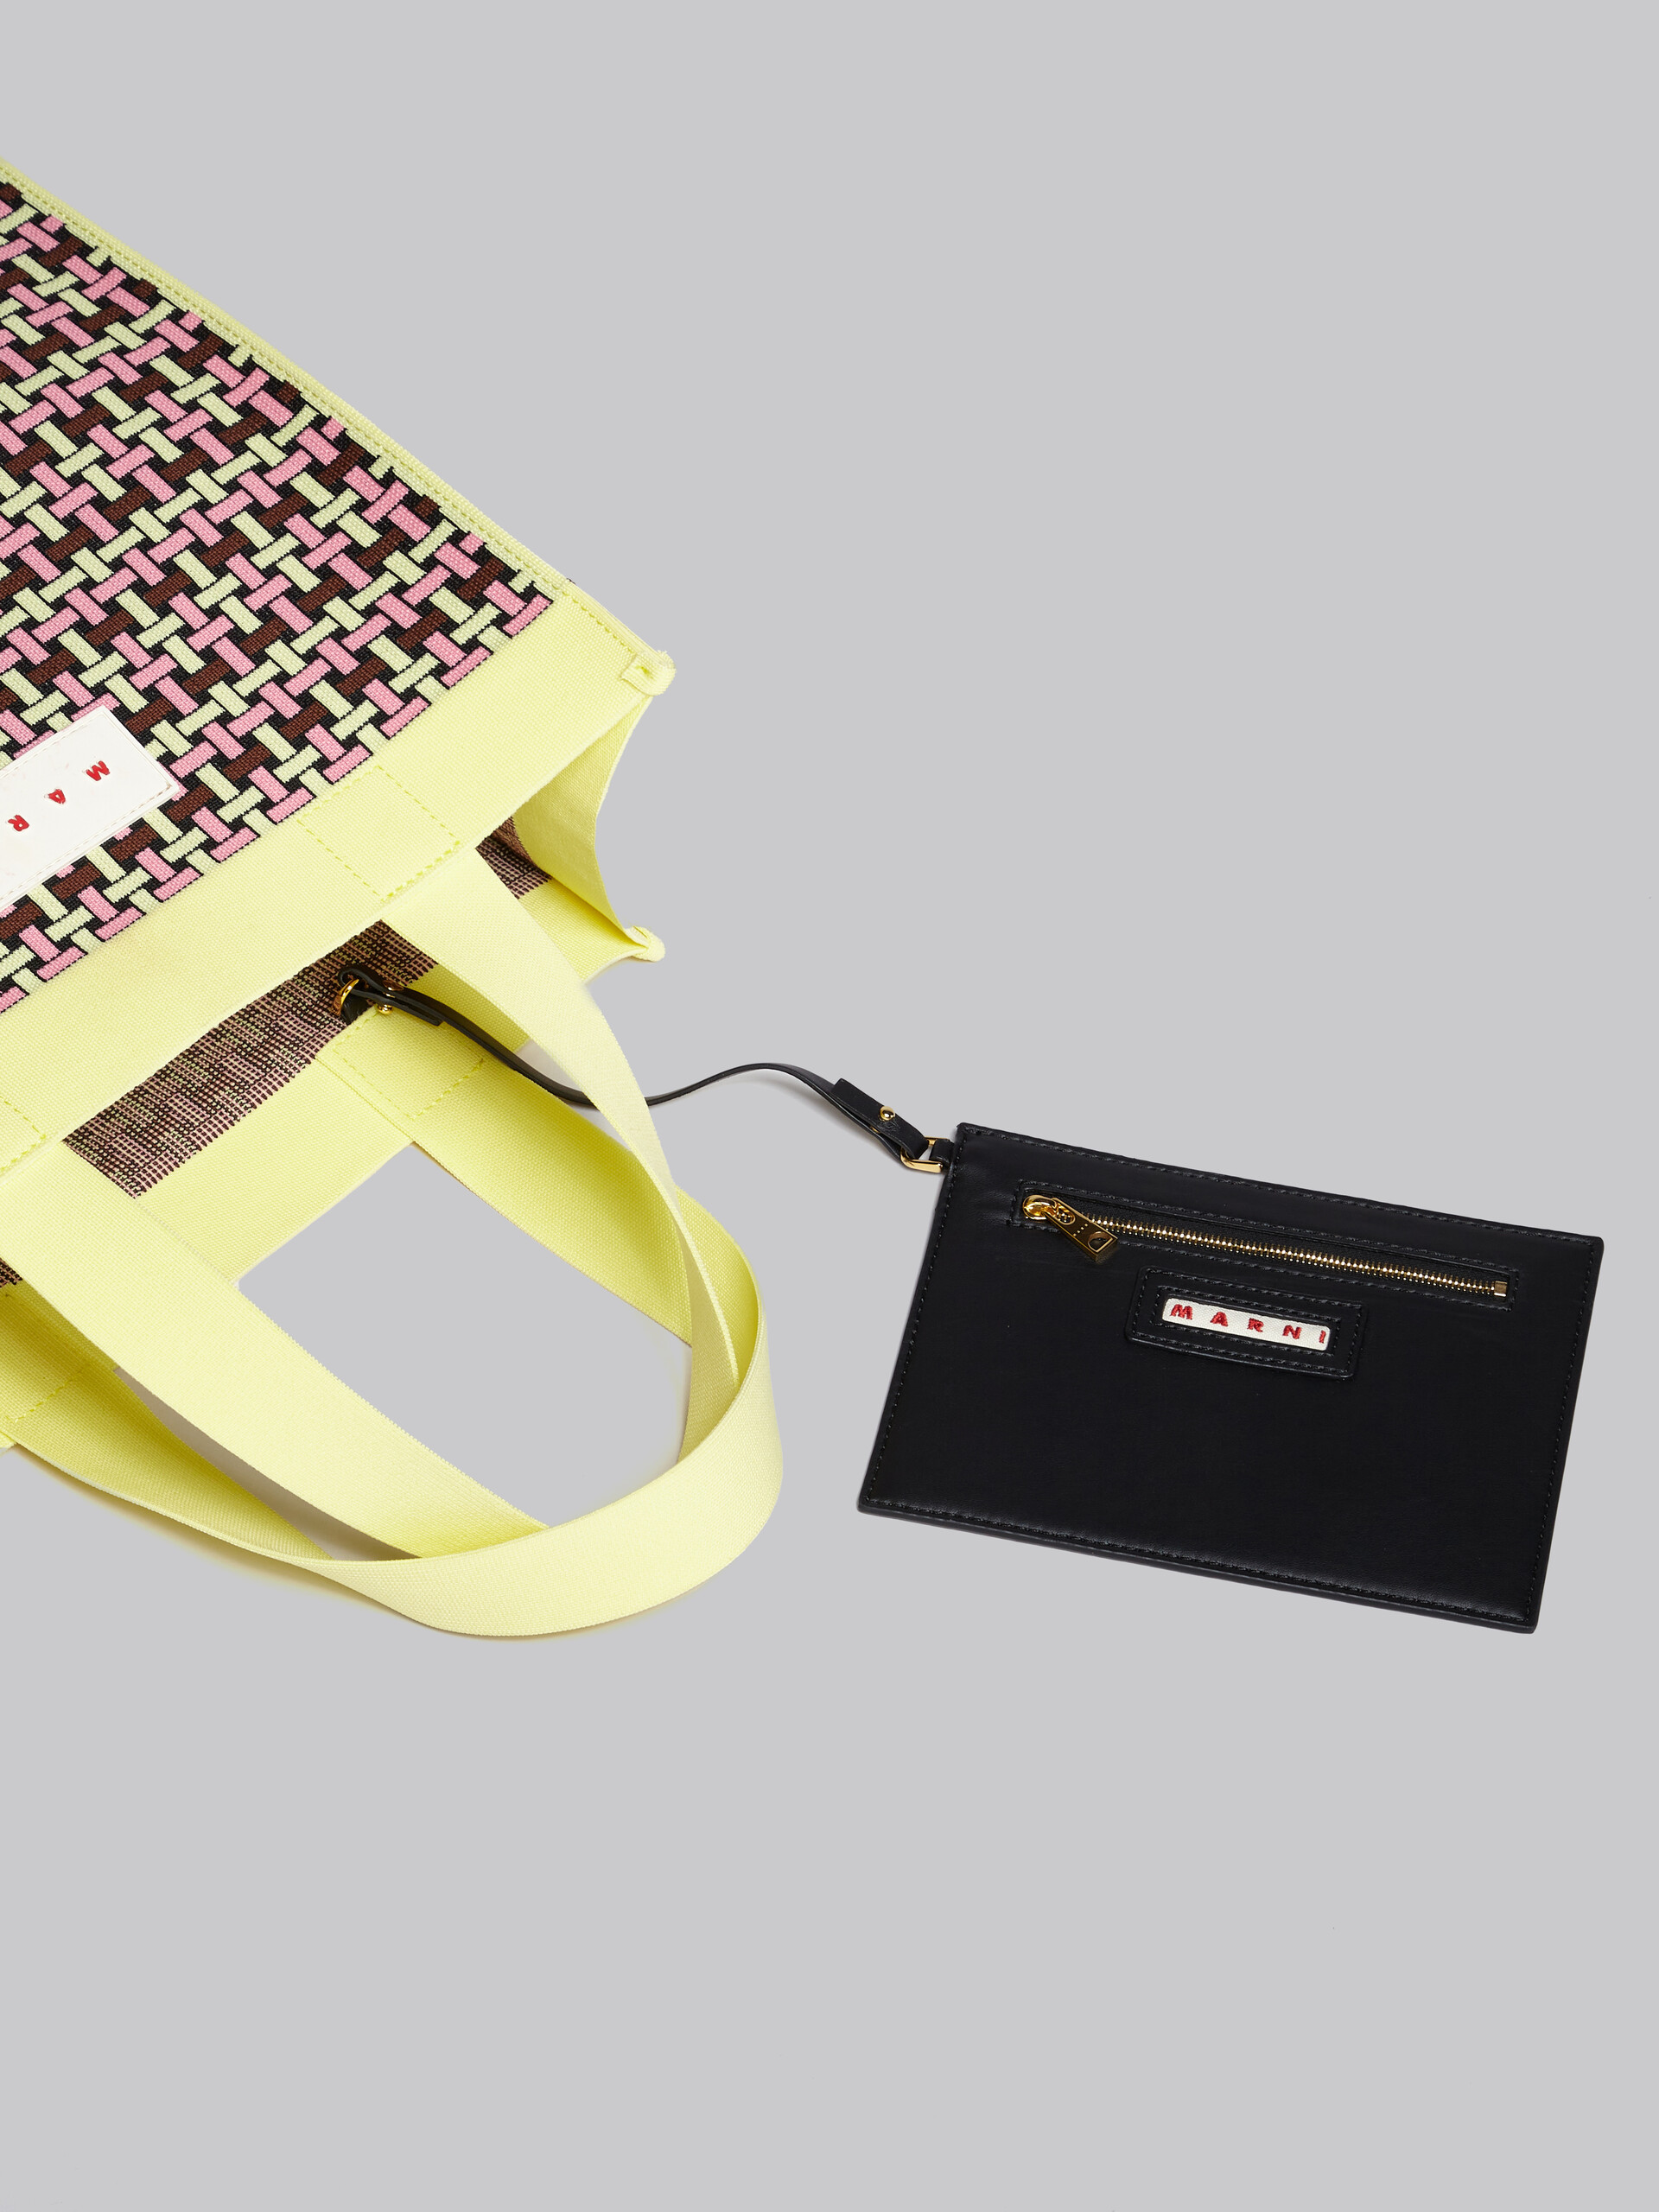 Light yellow brown and pink jacquard shopping bag - Shopping Bags - Image 4